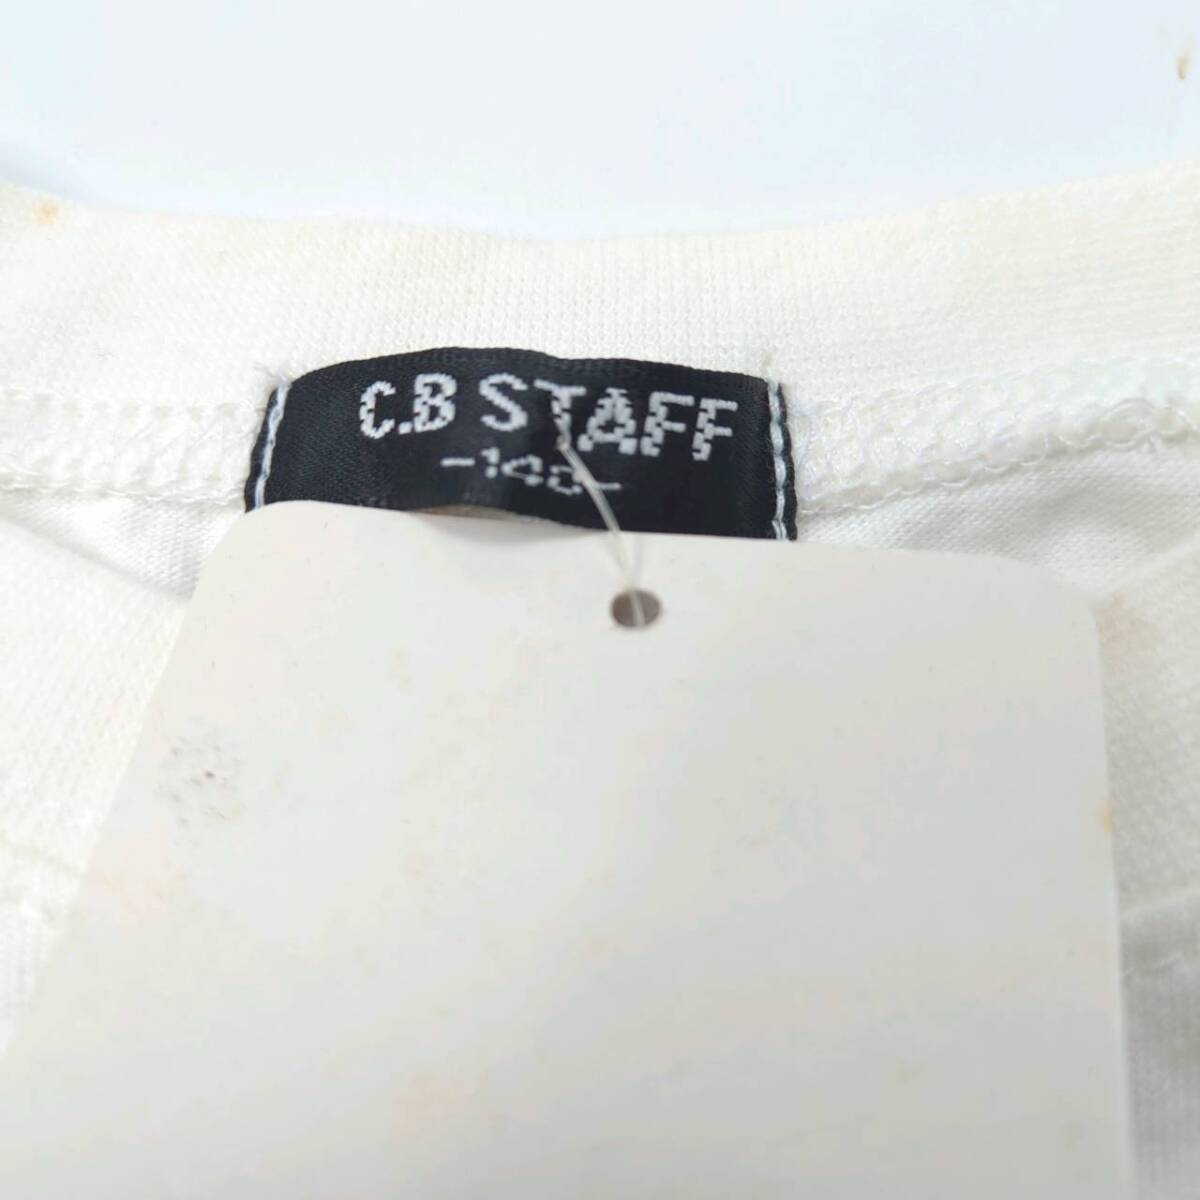 140 C.B STAFF プリントTシャツ ラグラン袖 ホワイト ピンク グレー 半袖 リユース ultralto ts1838